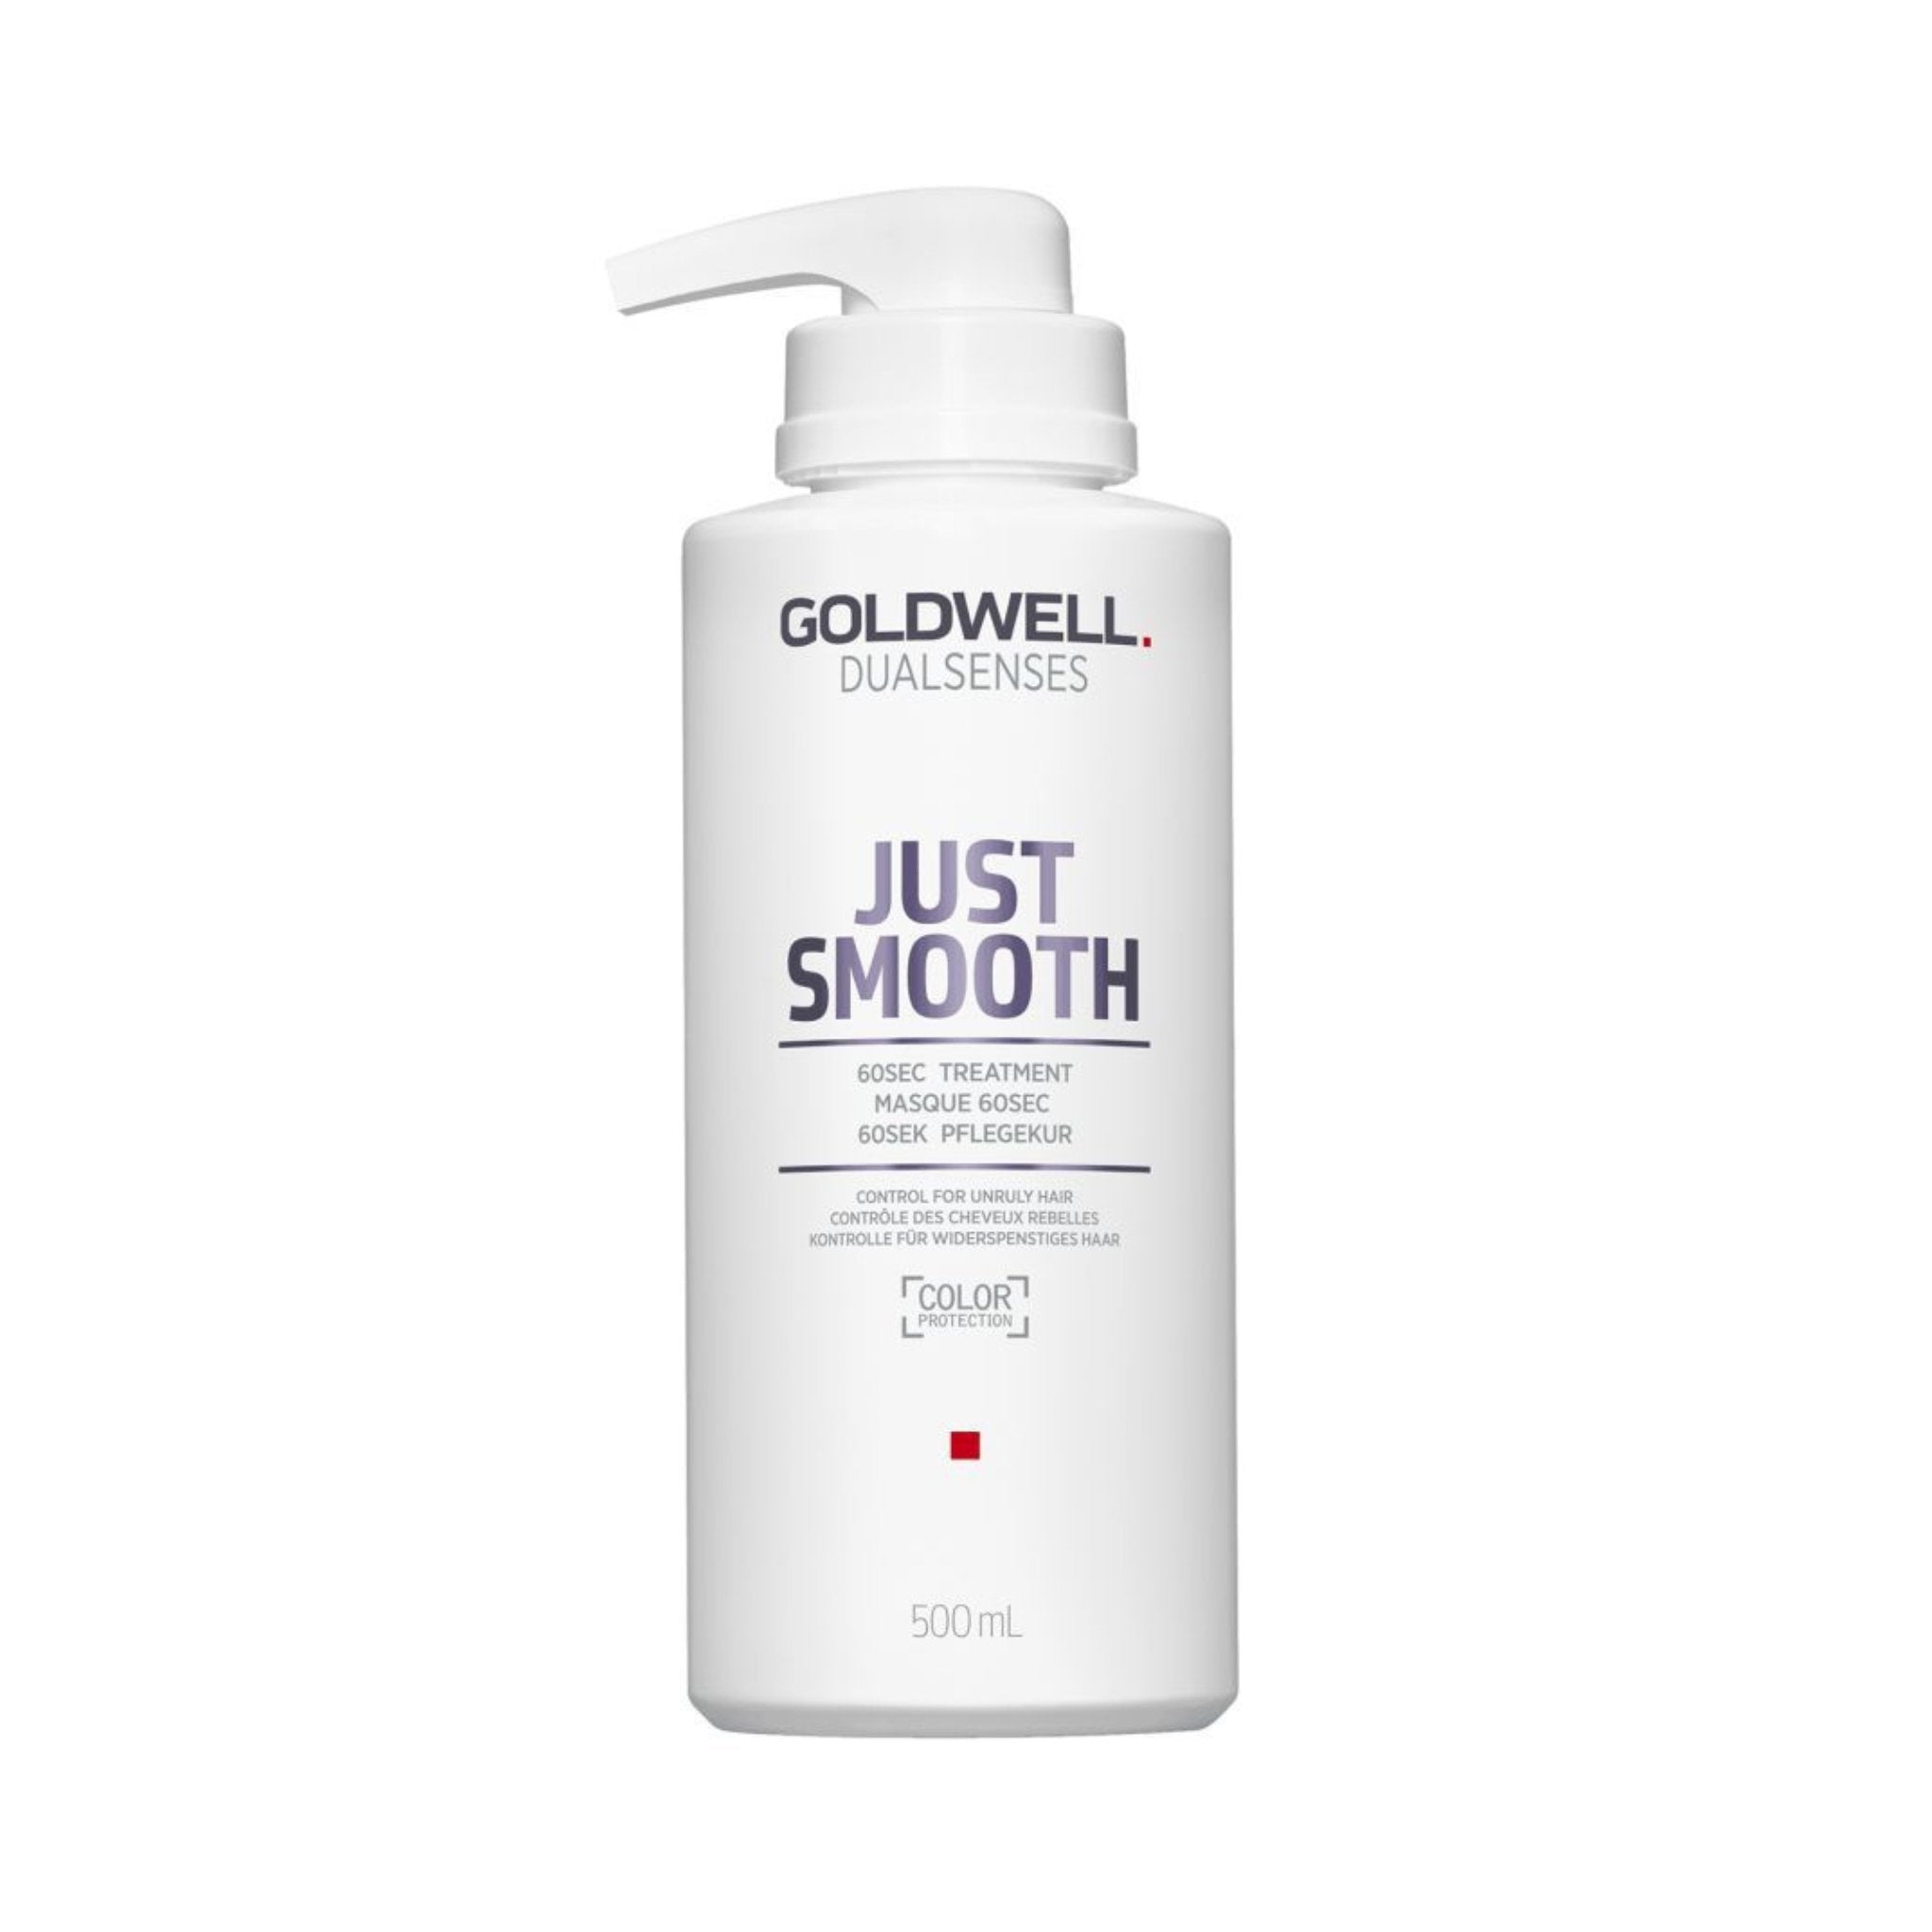 Goldwell. Dual Senses Traitement 60 secondes Just Smooth - 500 ml - Concept C. Shop